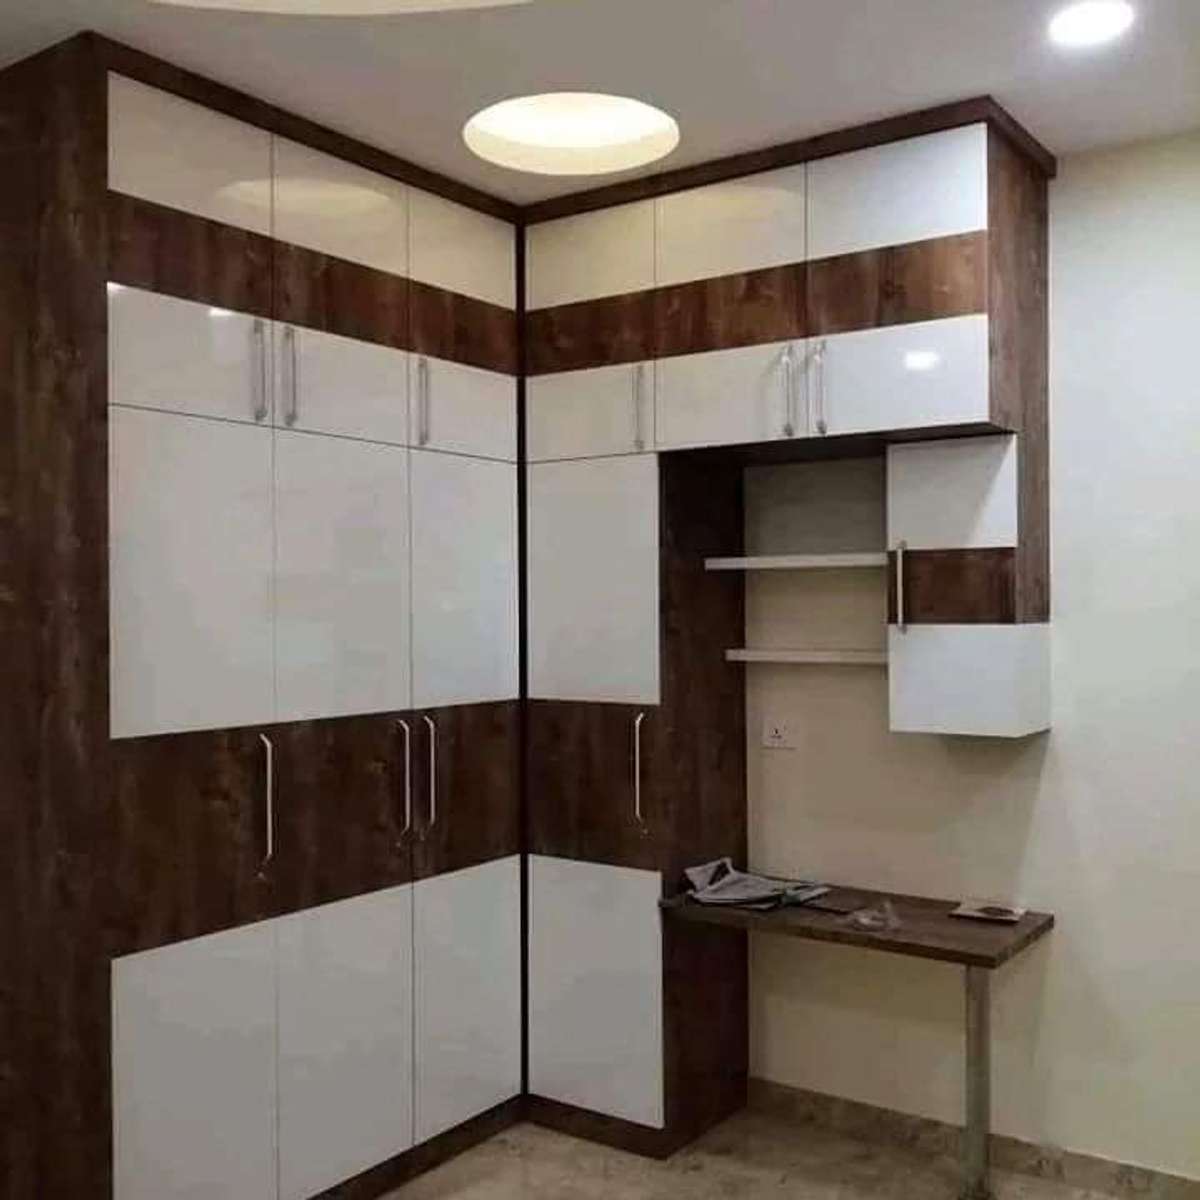 Electricals, Furniture, Home Decor, Wall Designs by Carpenter ЁЯЩП рдлреЙрд▓реЛ рдХрд░реЛ рджрд┐рд▓реНрд▓реА рдХрд╛рд░рдкреЗрдВрдЯрд░ рдХреЛ, Delhi | Kolo